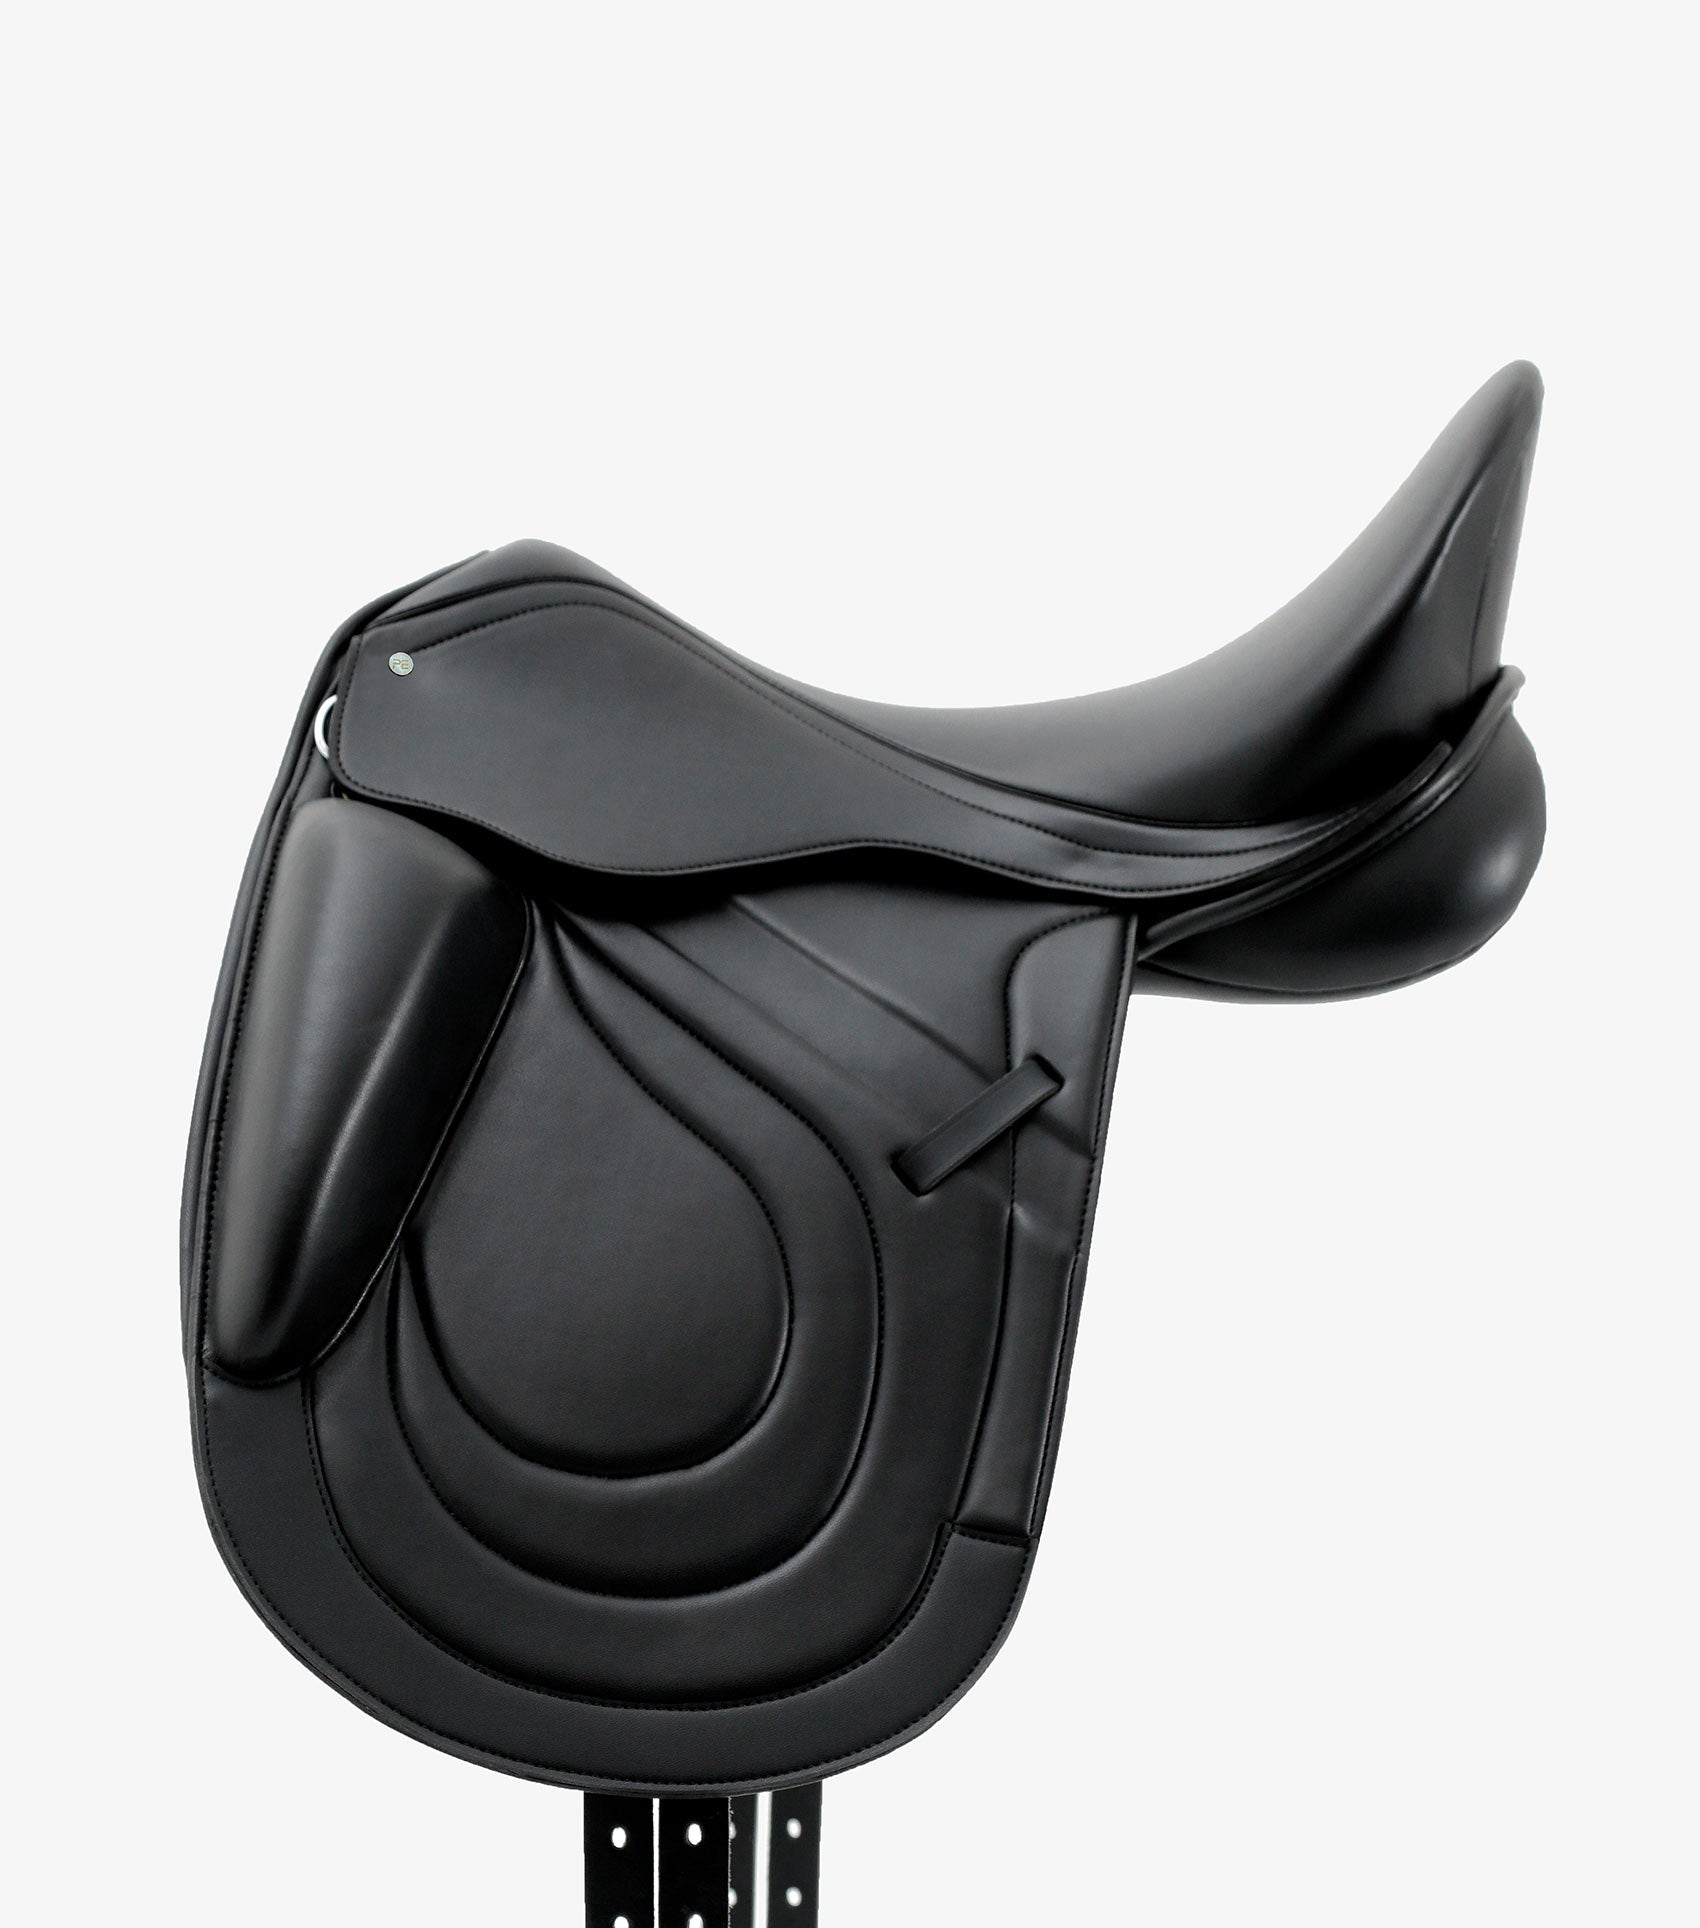 PE - Bletchley Synthetic Monoflap Dressage Saddle